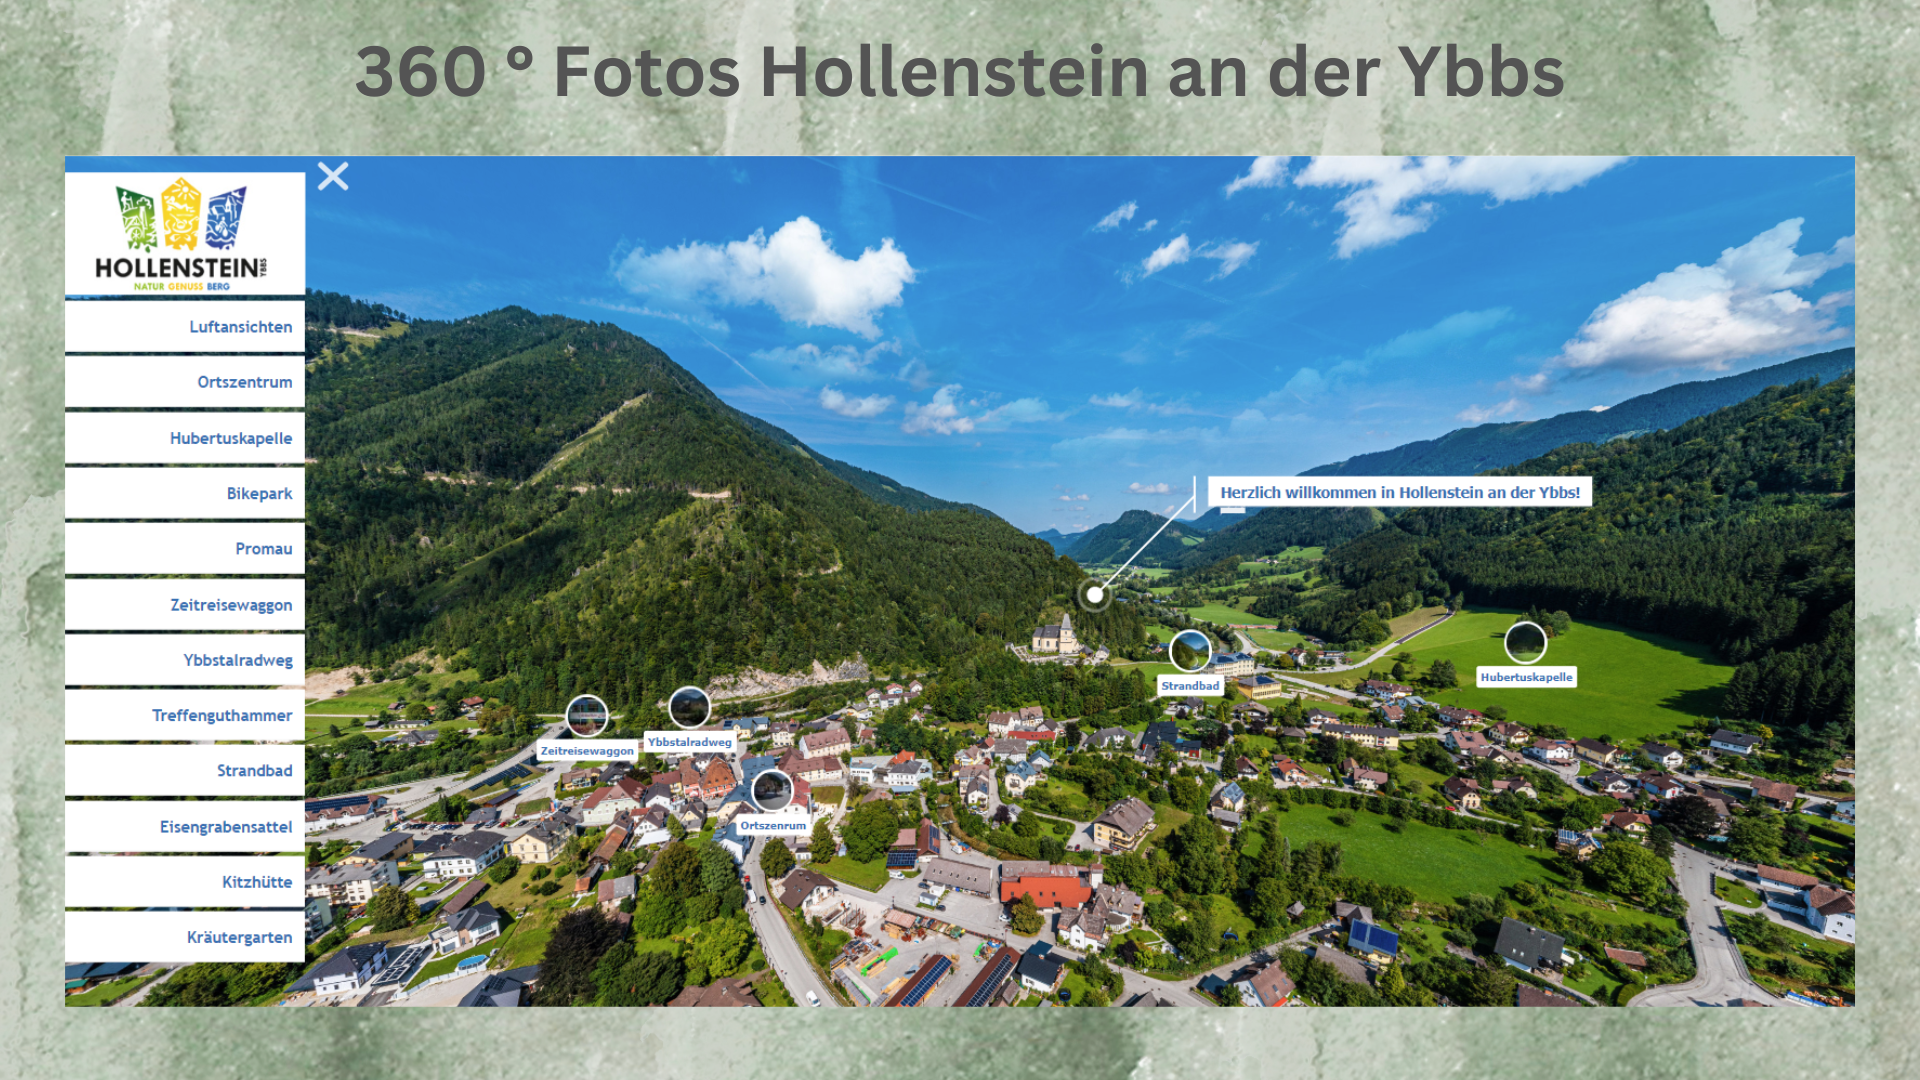 360 ° Fotos Hollenstein an der Ybbs.png